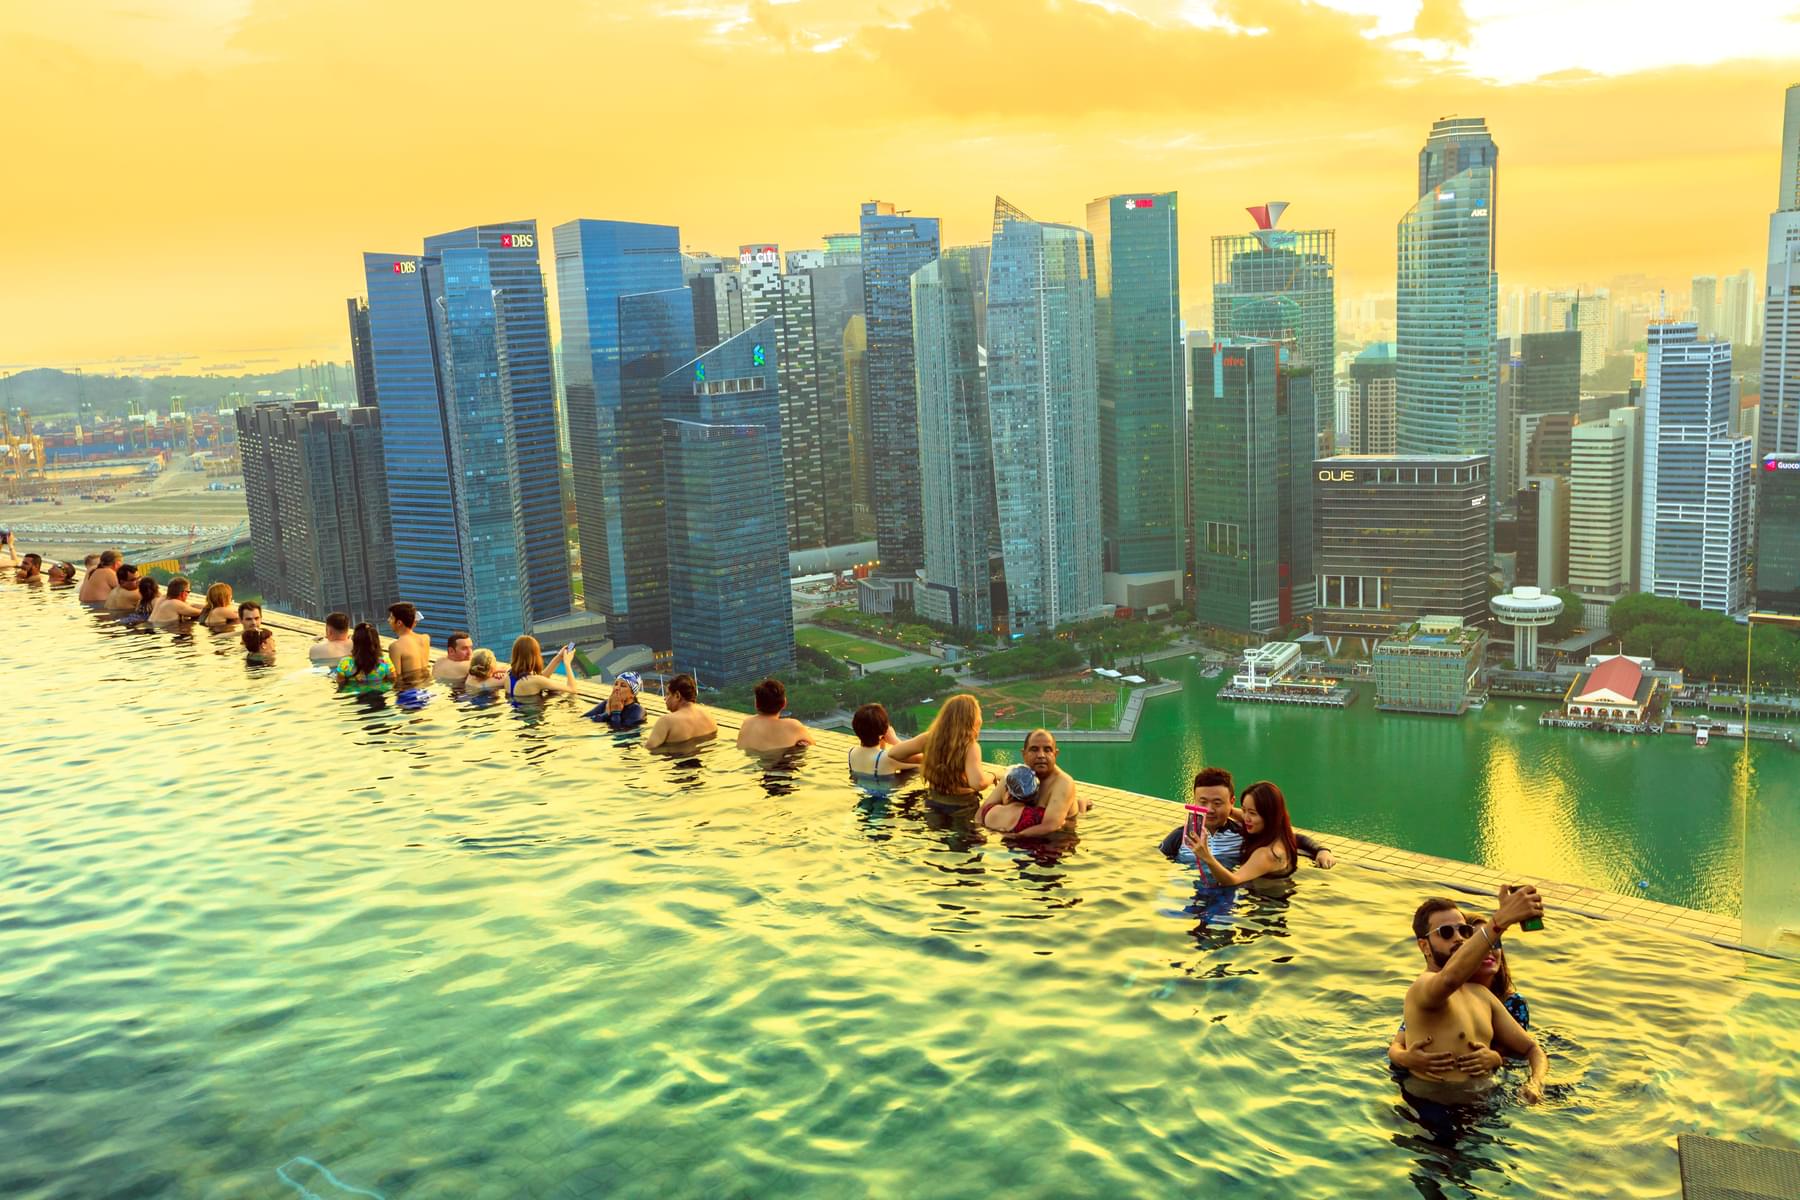 Splash around The Infinity Pool of Marina Bay Sands